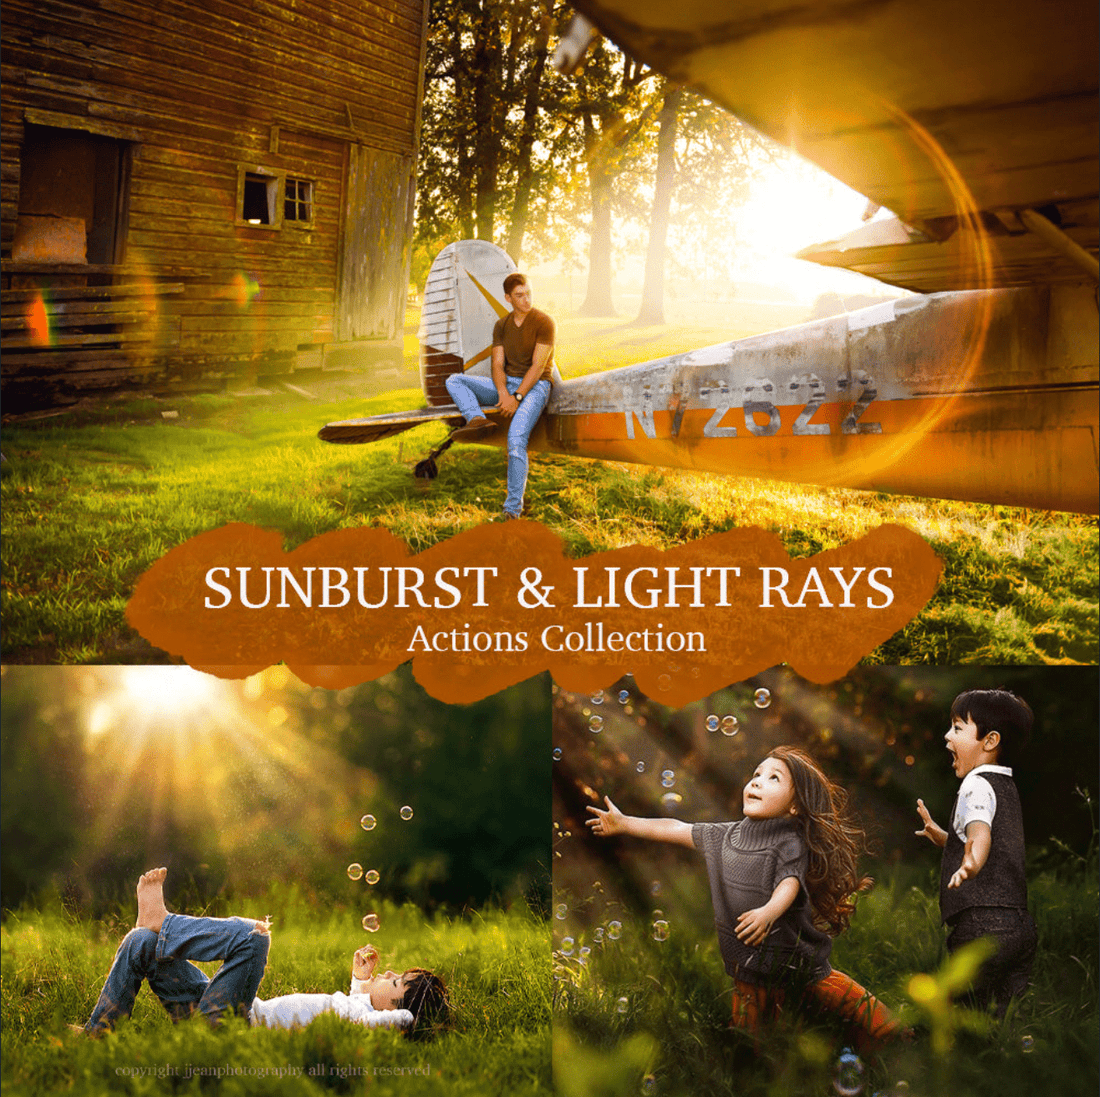 How to Use Sunbursts & Light Rays - ShopJeanPhotography.com